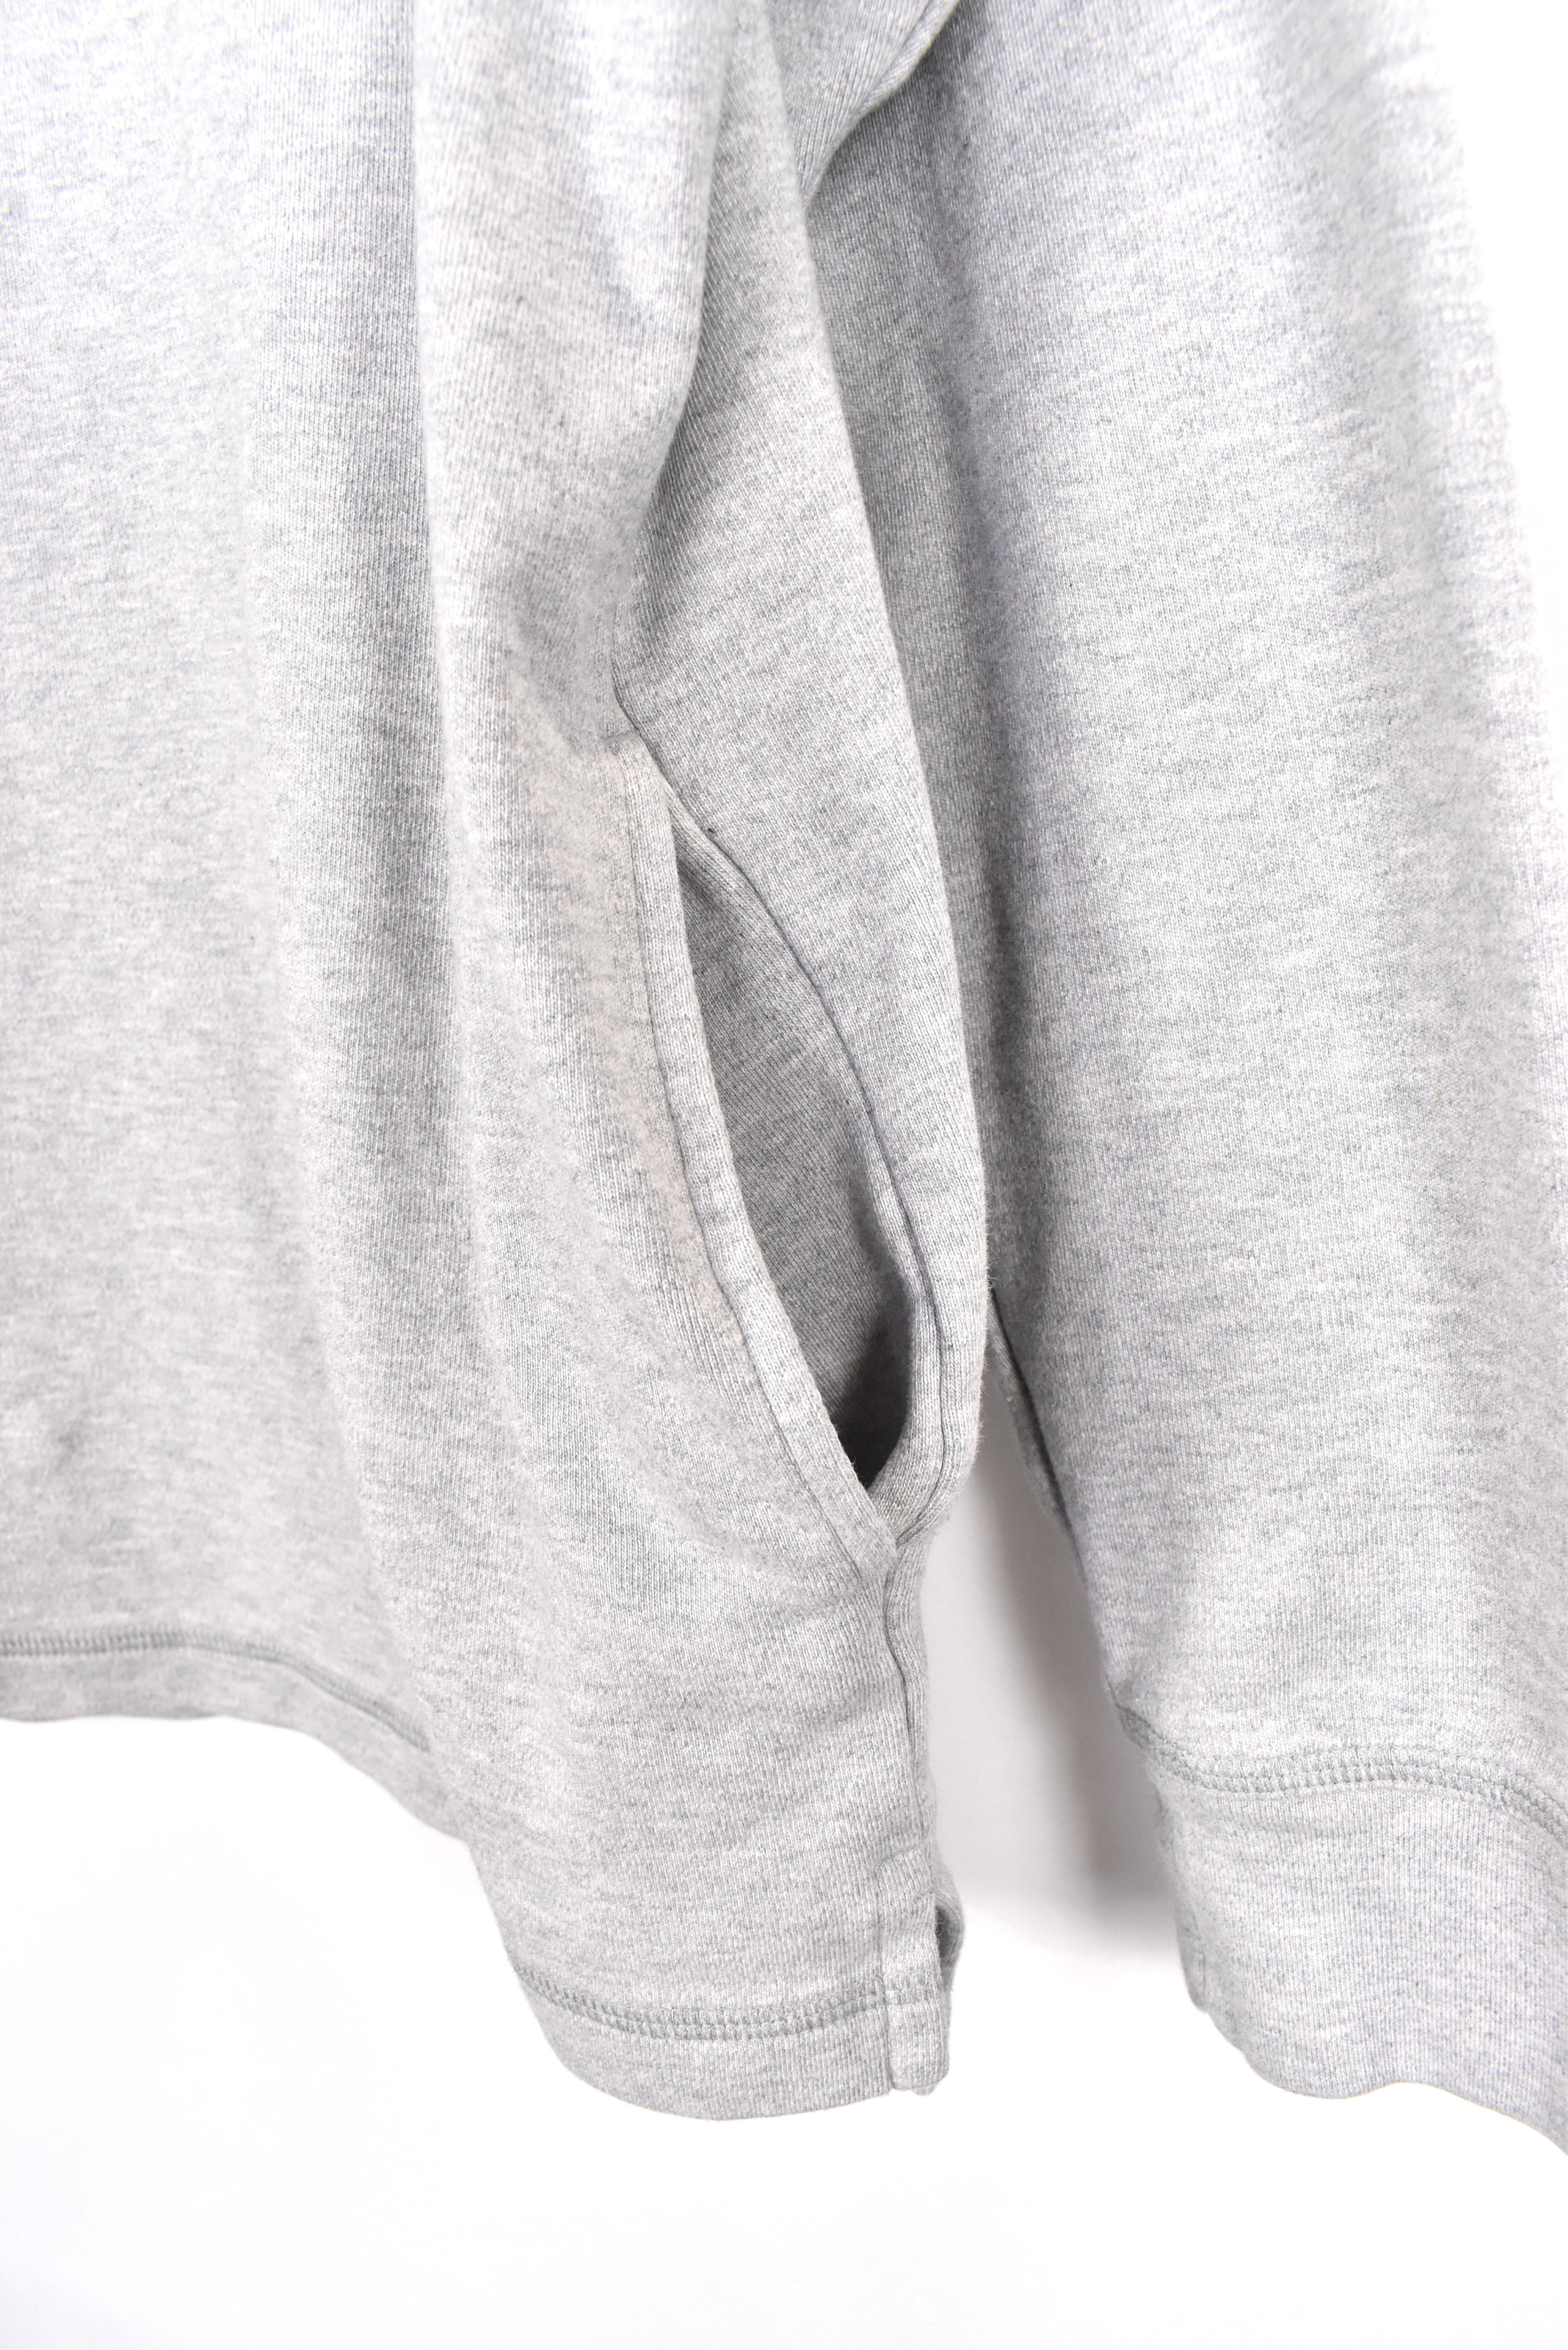 Vintage Lacoste sweatshirt, grey embroidered 1/4 zip jumper - AU L LACOSTE